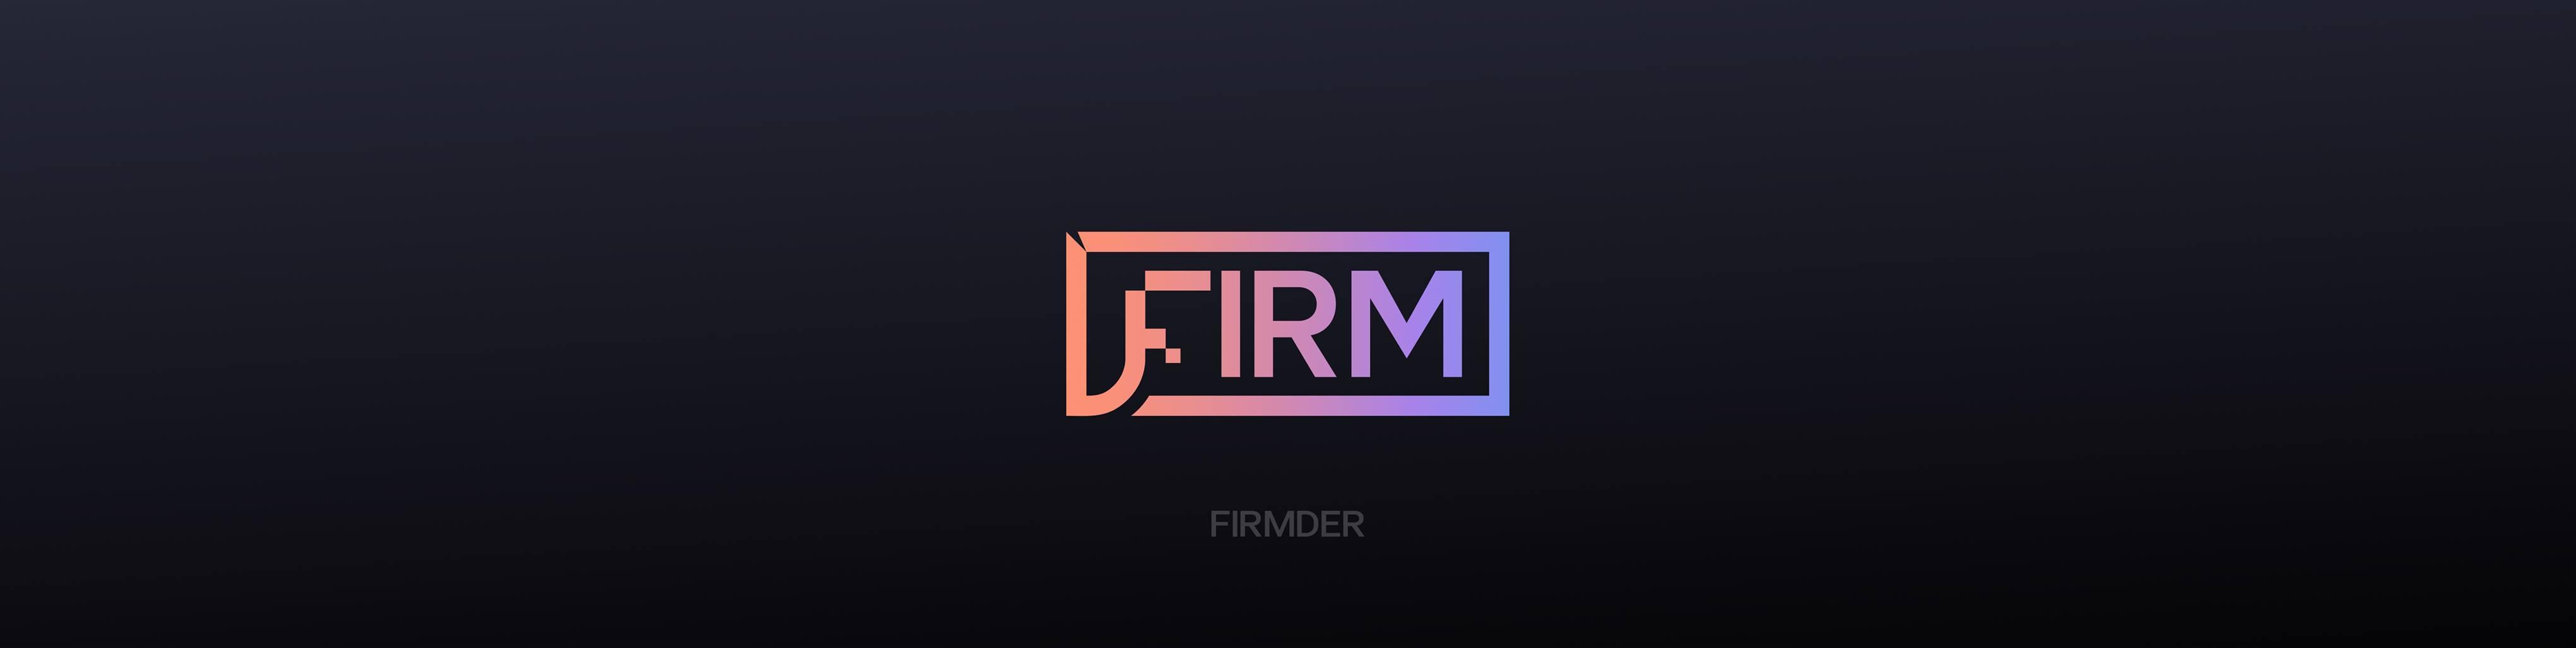 FIRMDER / startup from Berlin / Background